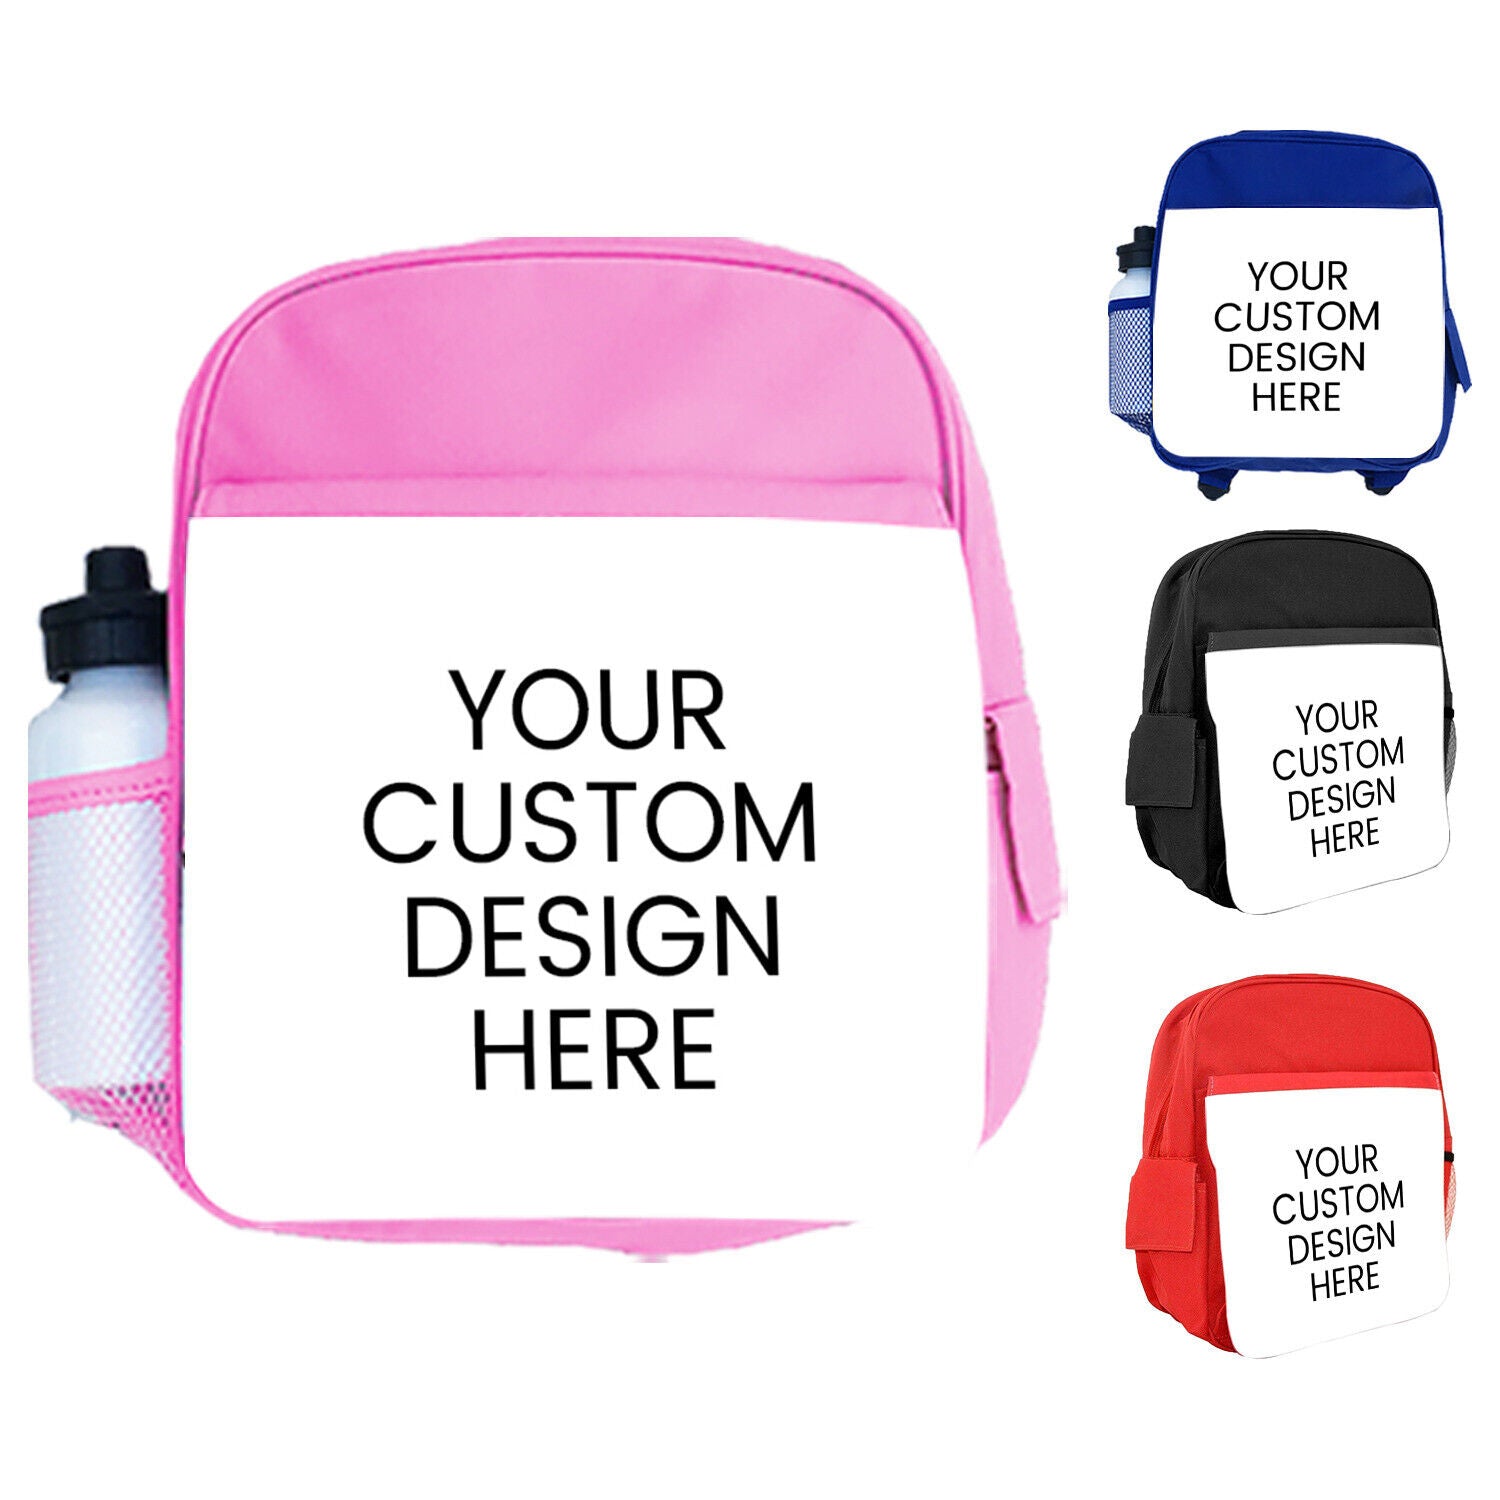 Personalised Kids Backpack Any Name Gaming Boys Girls Children School Bag 8